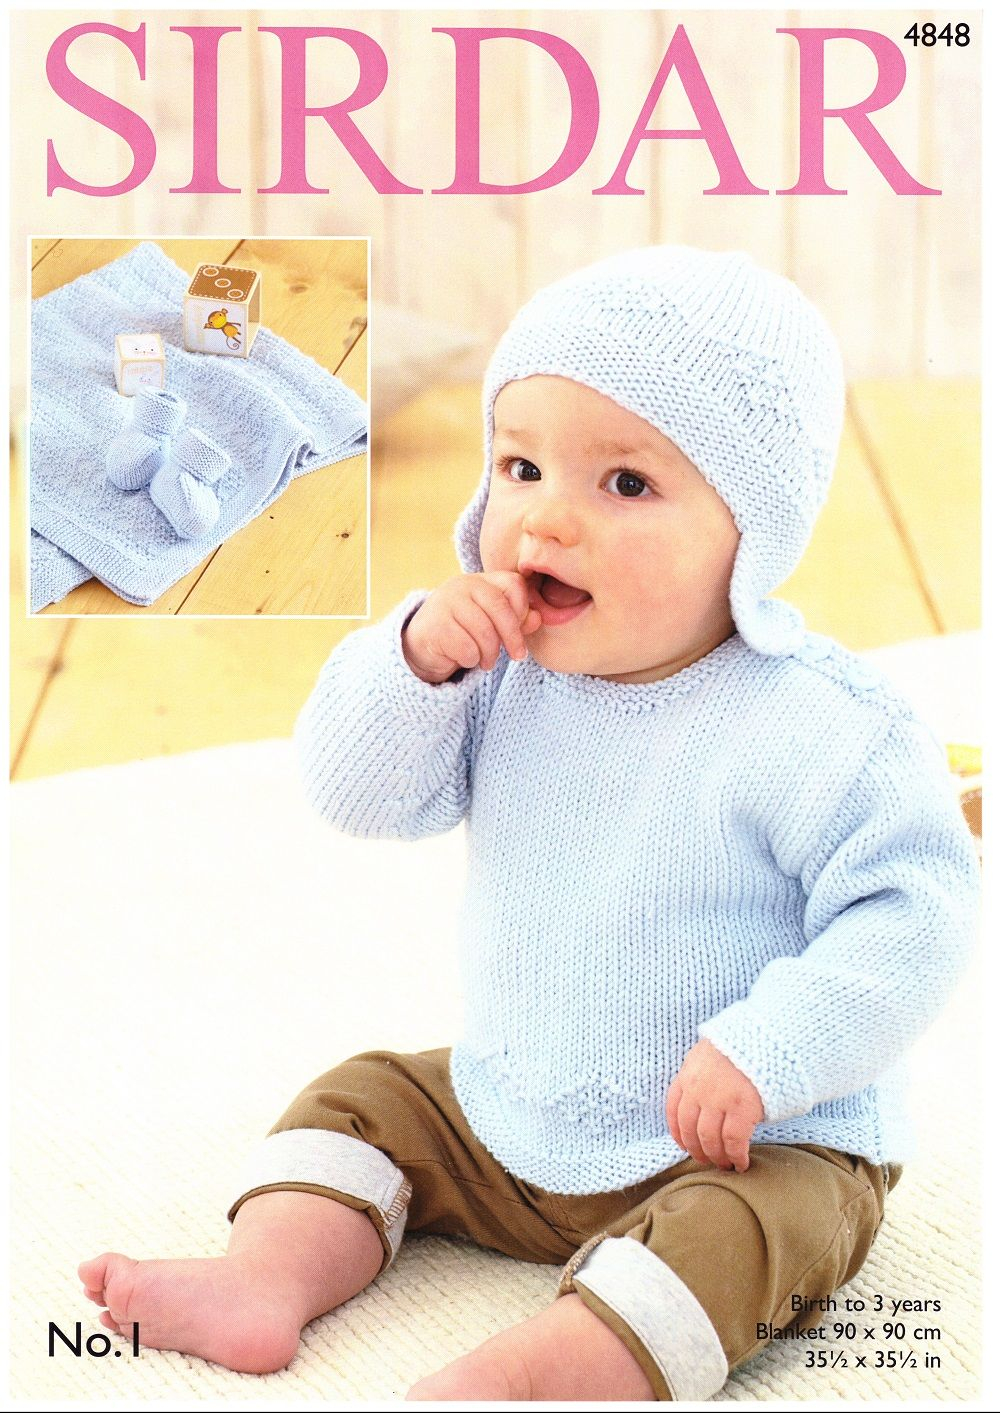 Sirdar Baby Knitting Patterns Sirdar Babies Sweater Helmet Blanket Knitting Pattern In No1 Dk 4848